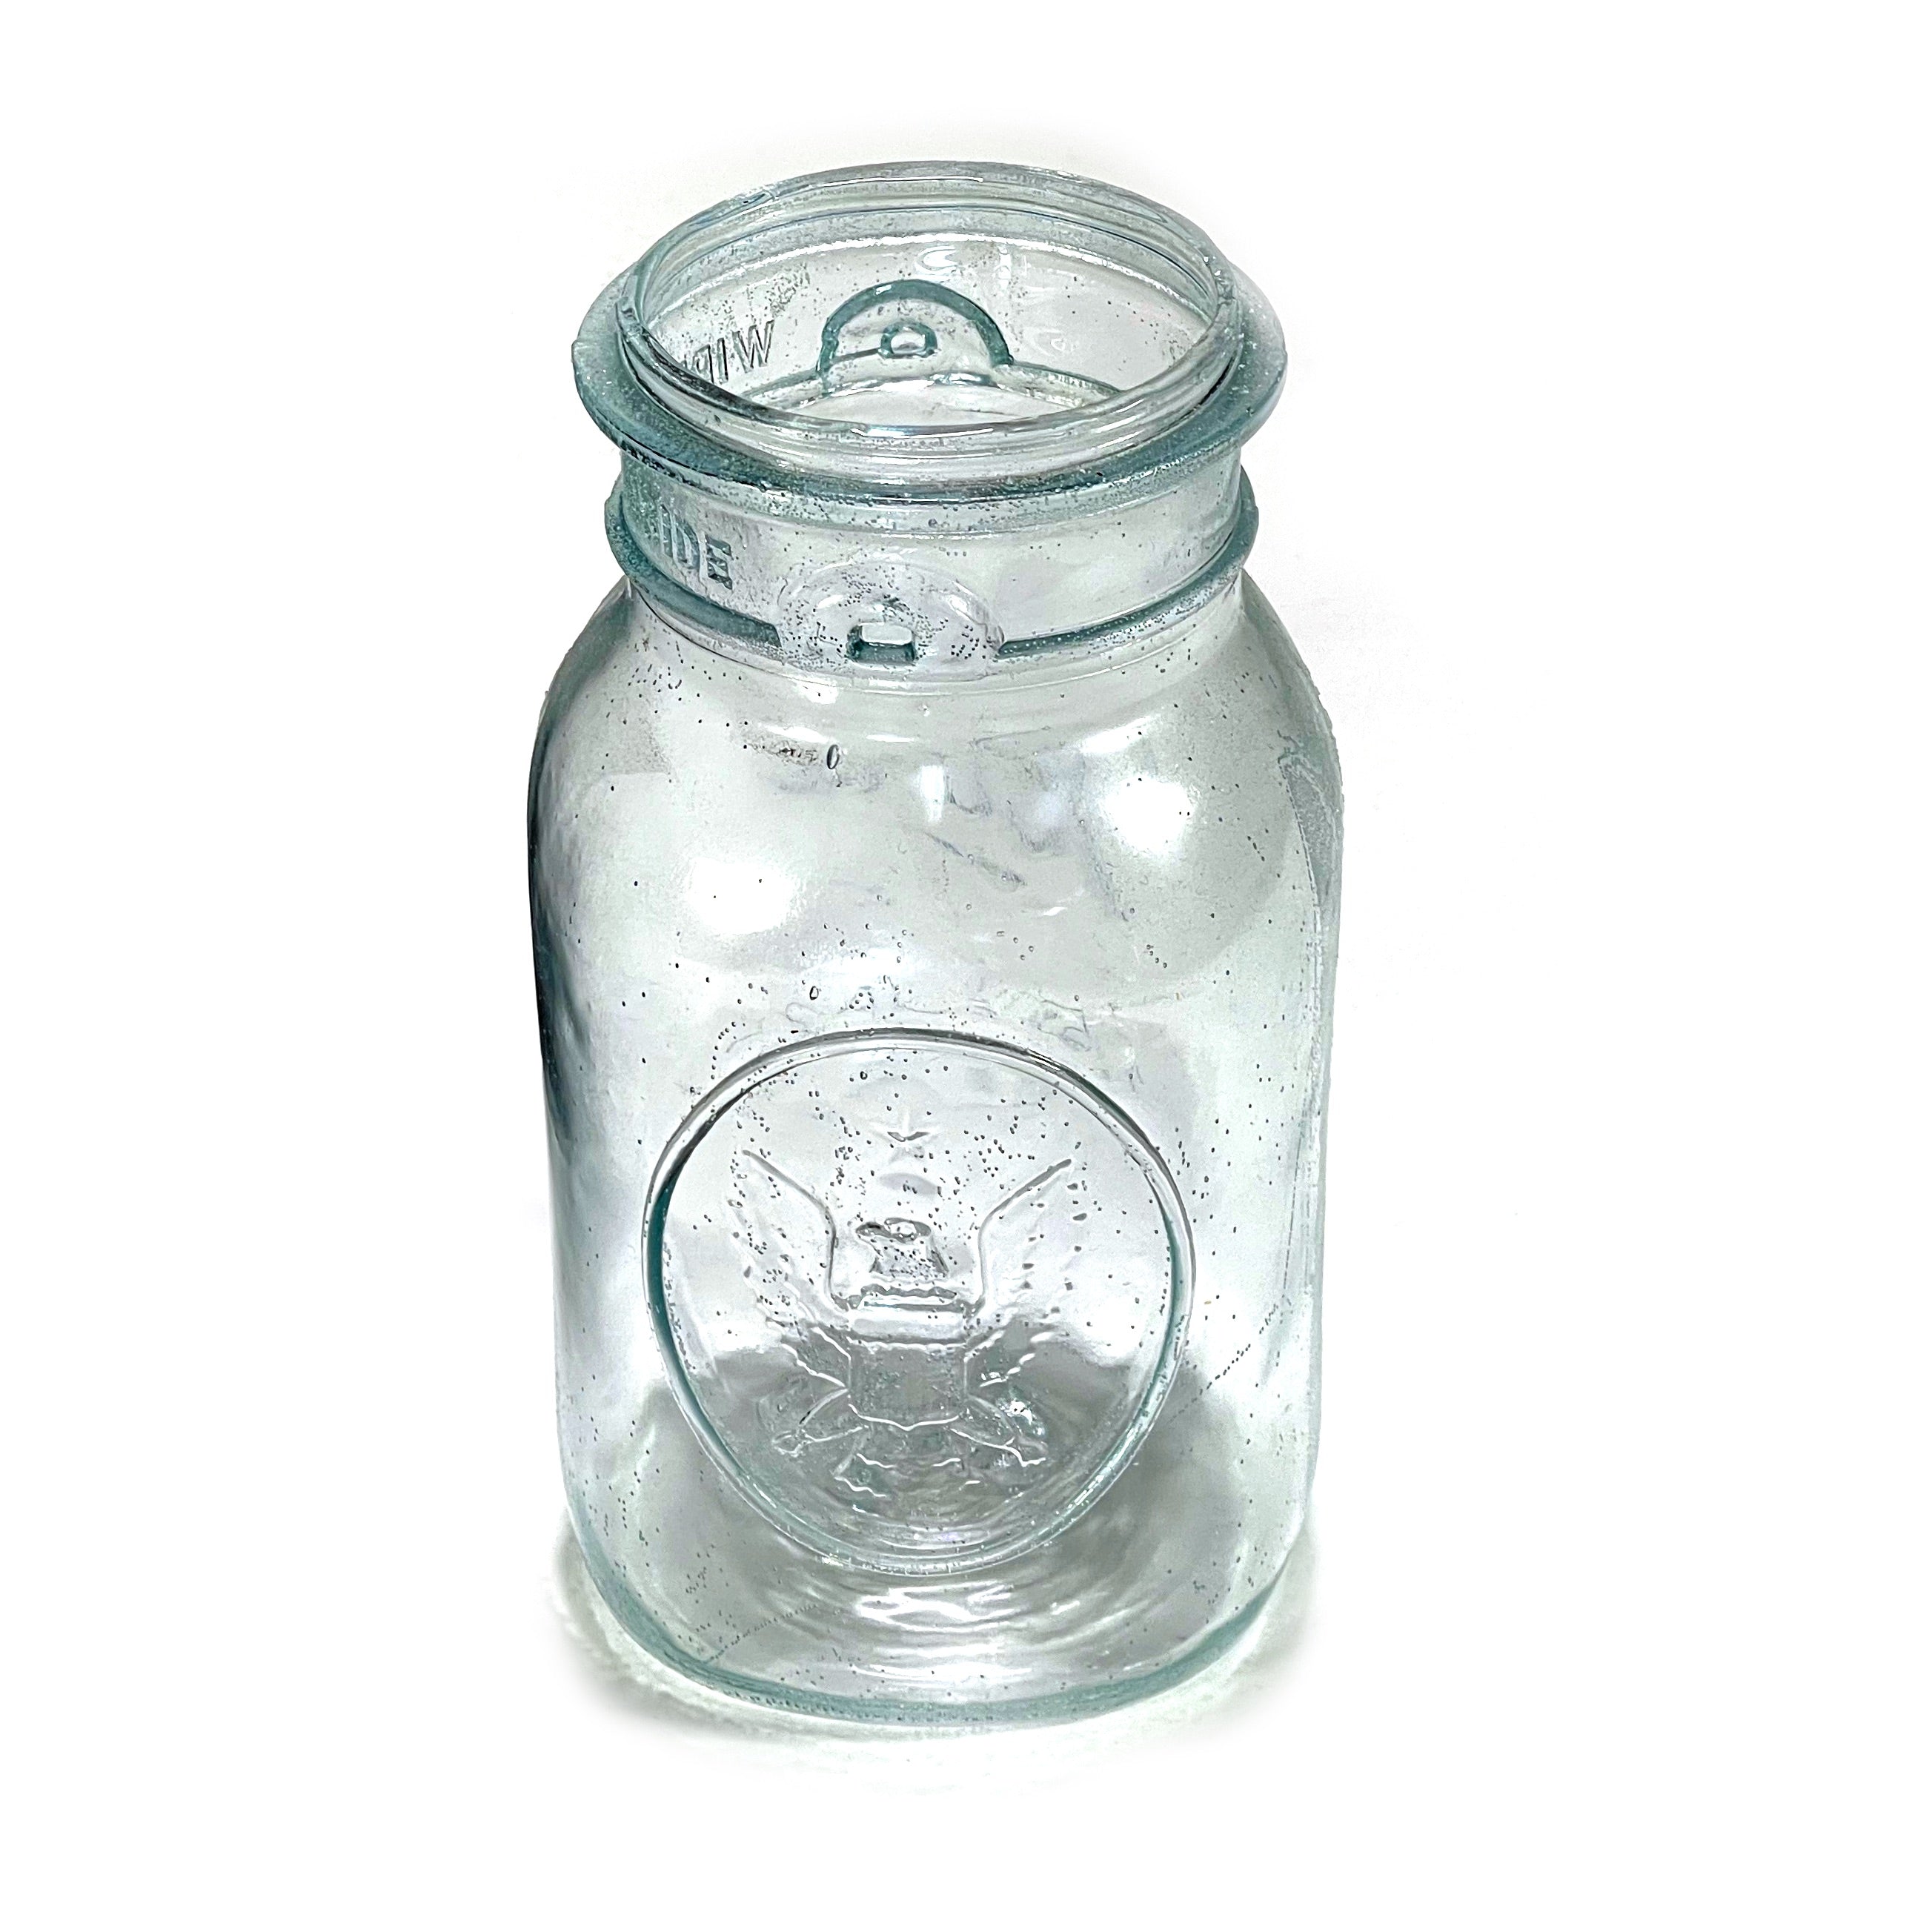 SMASHProps Breakaway Large Mason Jar Prop - CLEAR - Clear